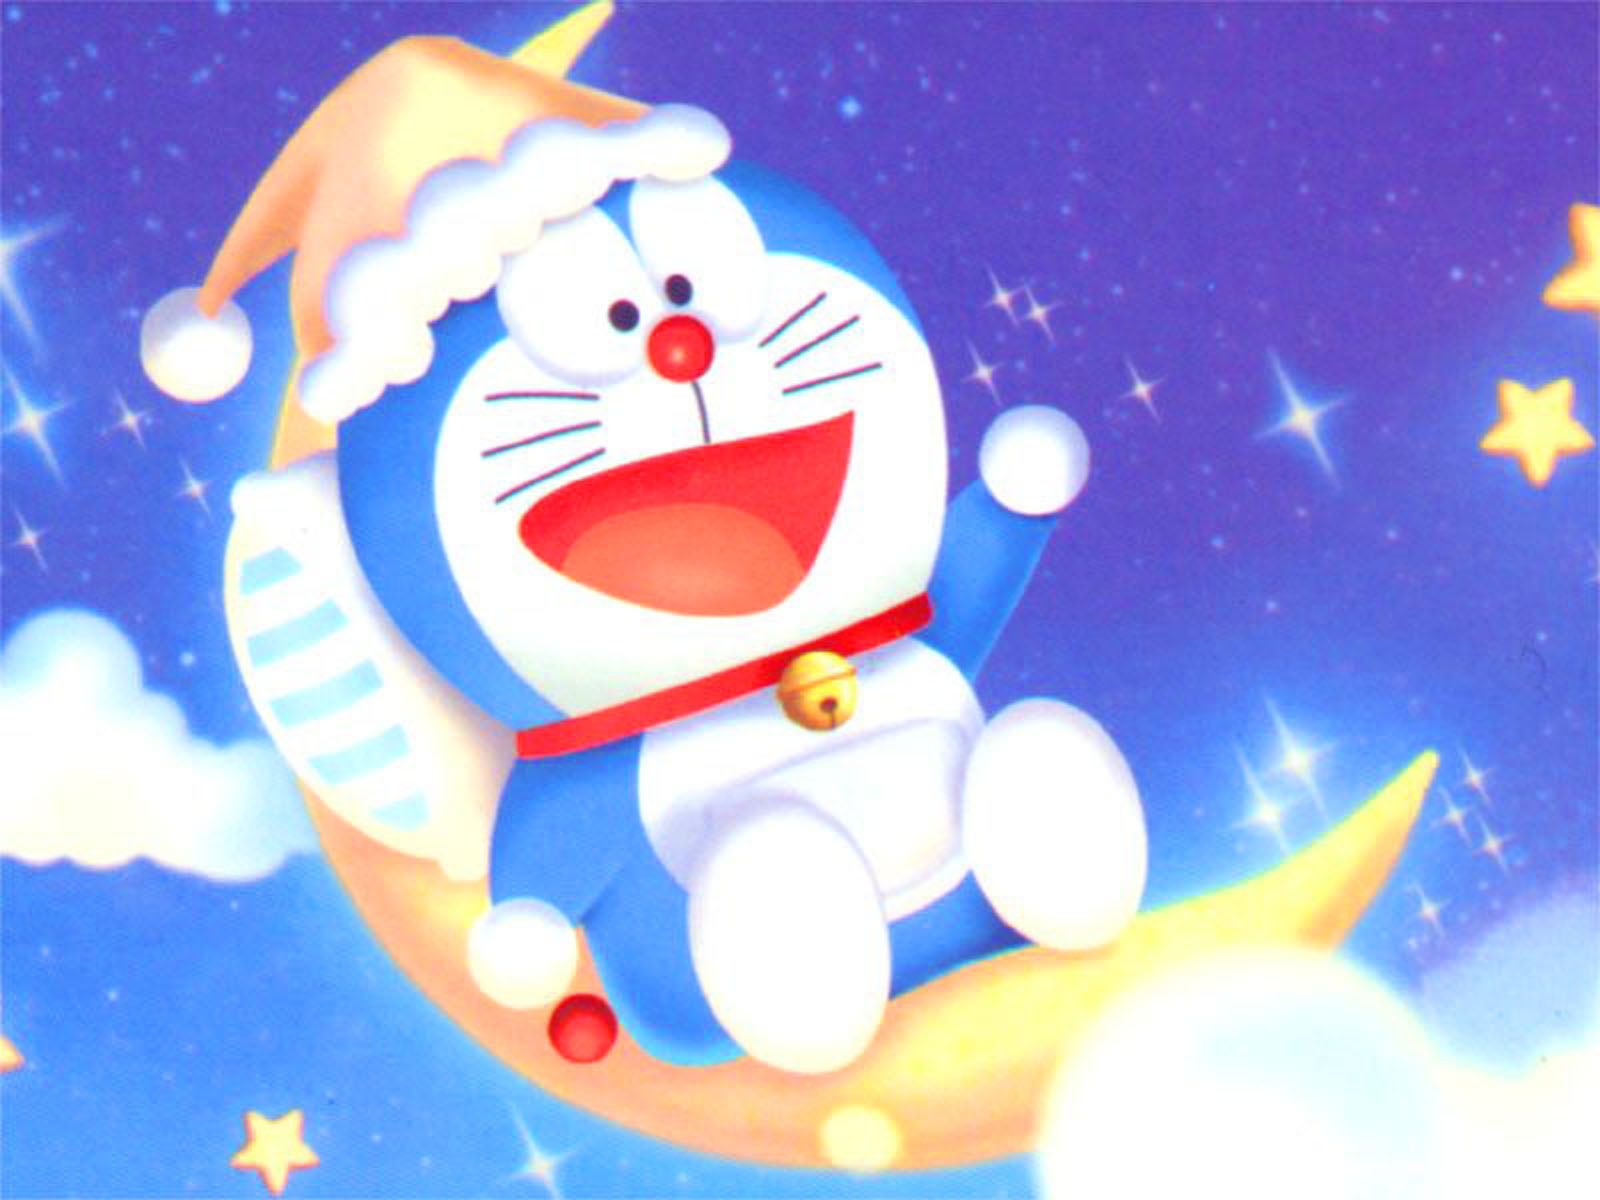 Wallpaper Doraemon HD Keren Deloiz